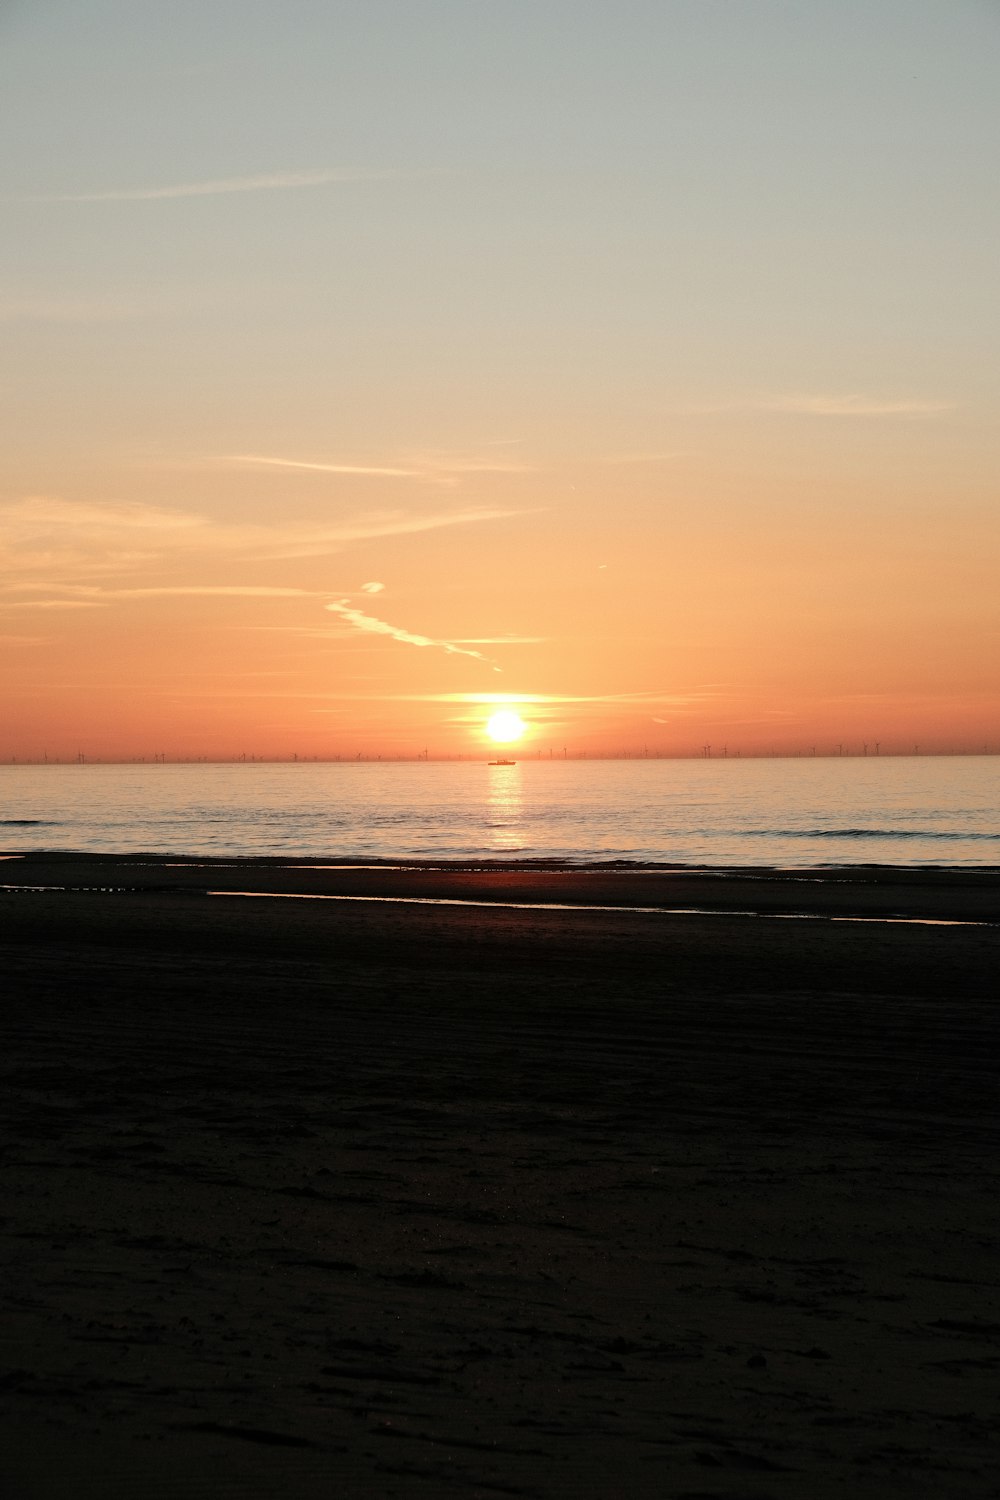 the sun is setting over the ocean on the beach